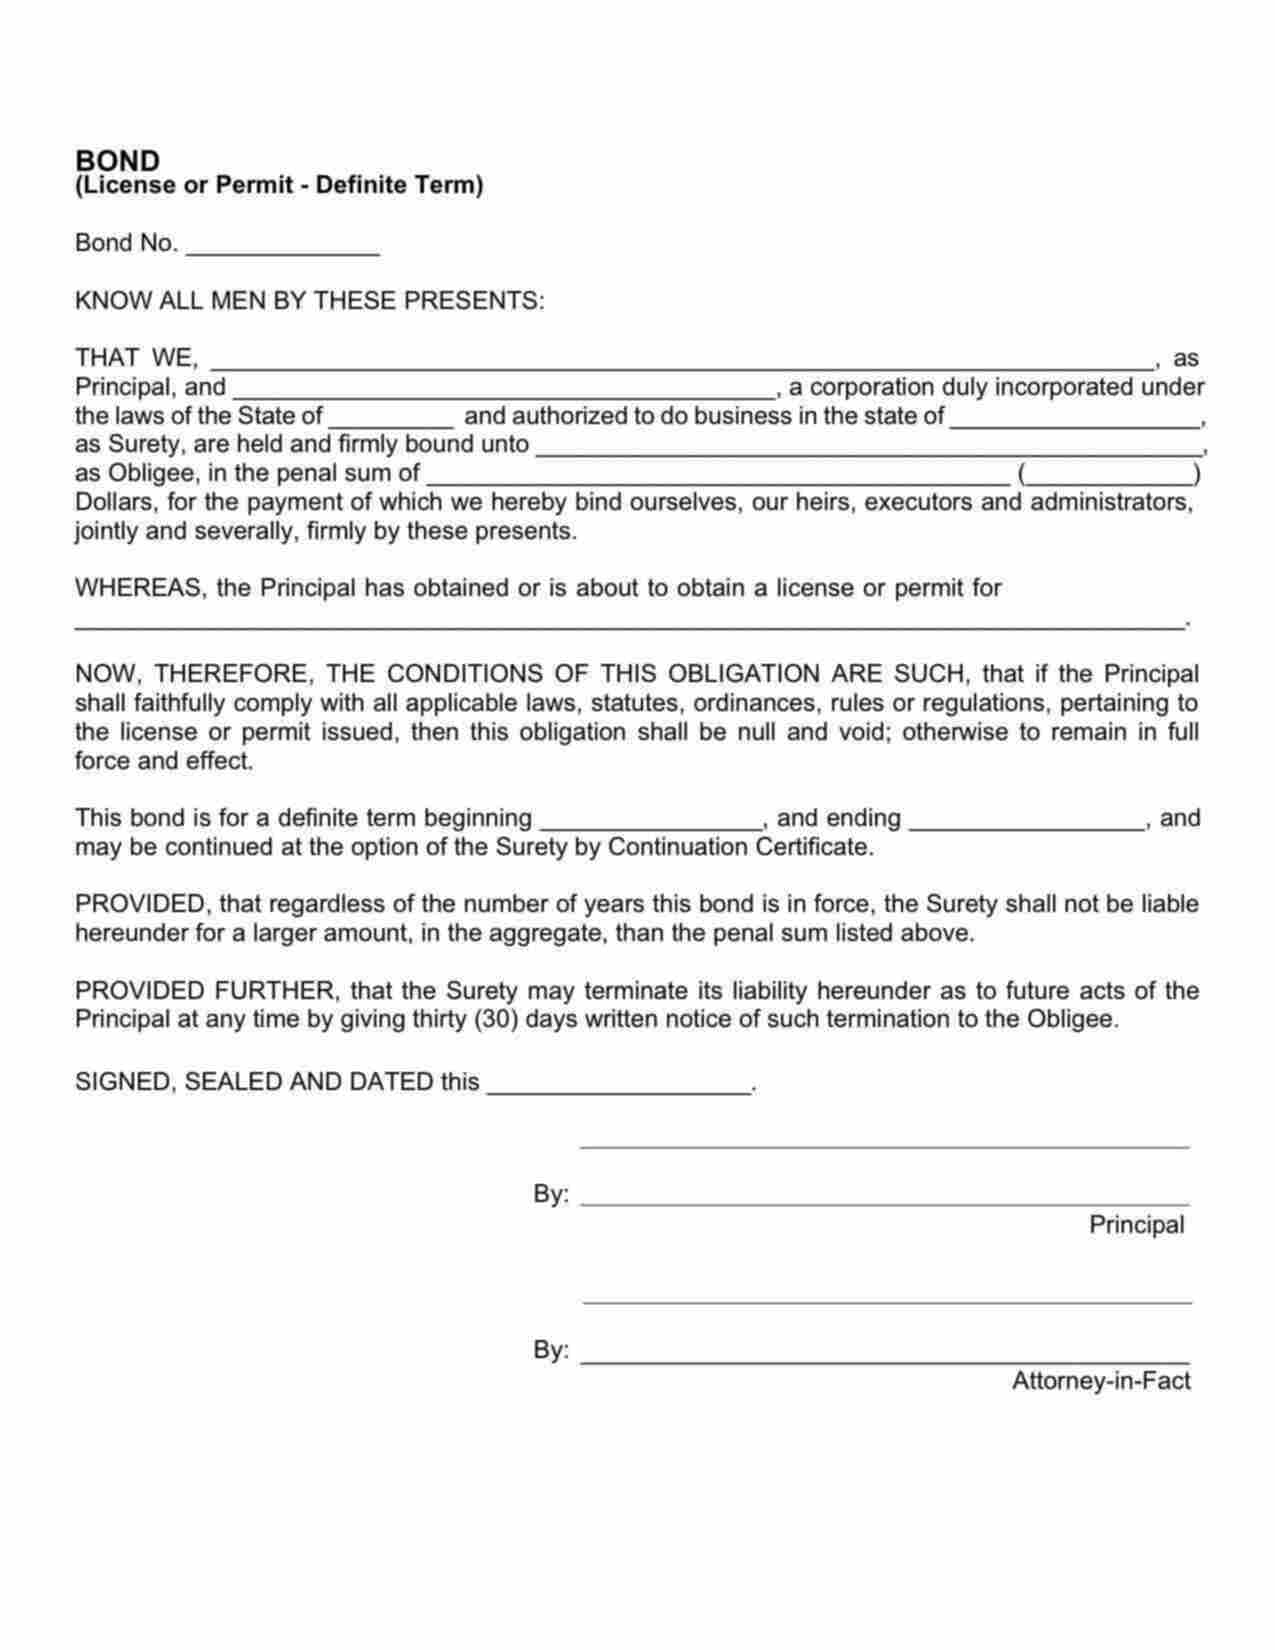 Mississippi License/Permit Bond Form